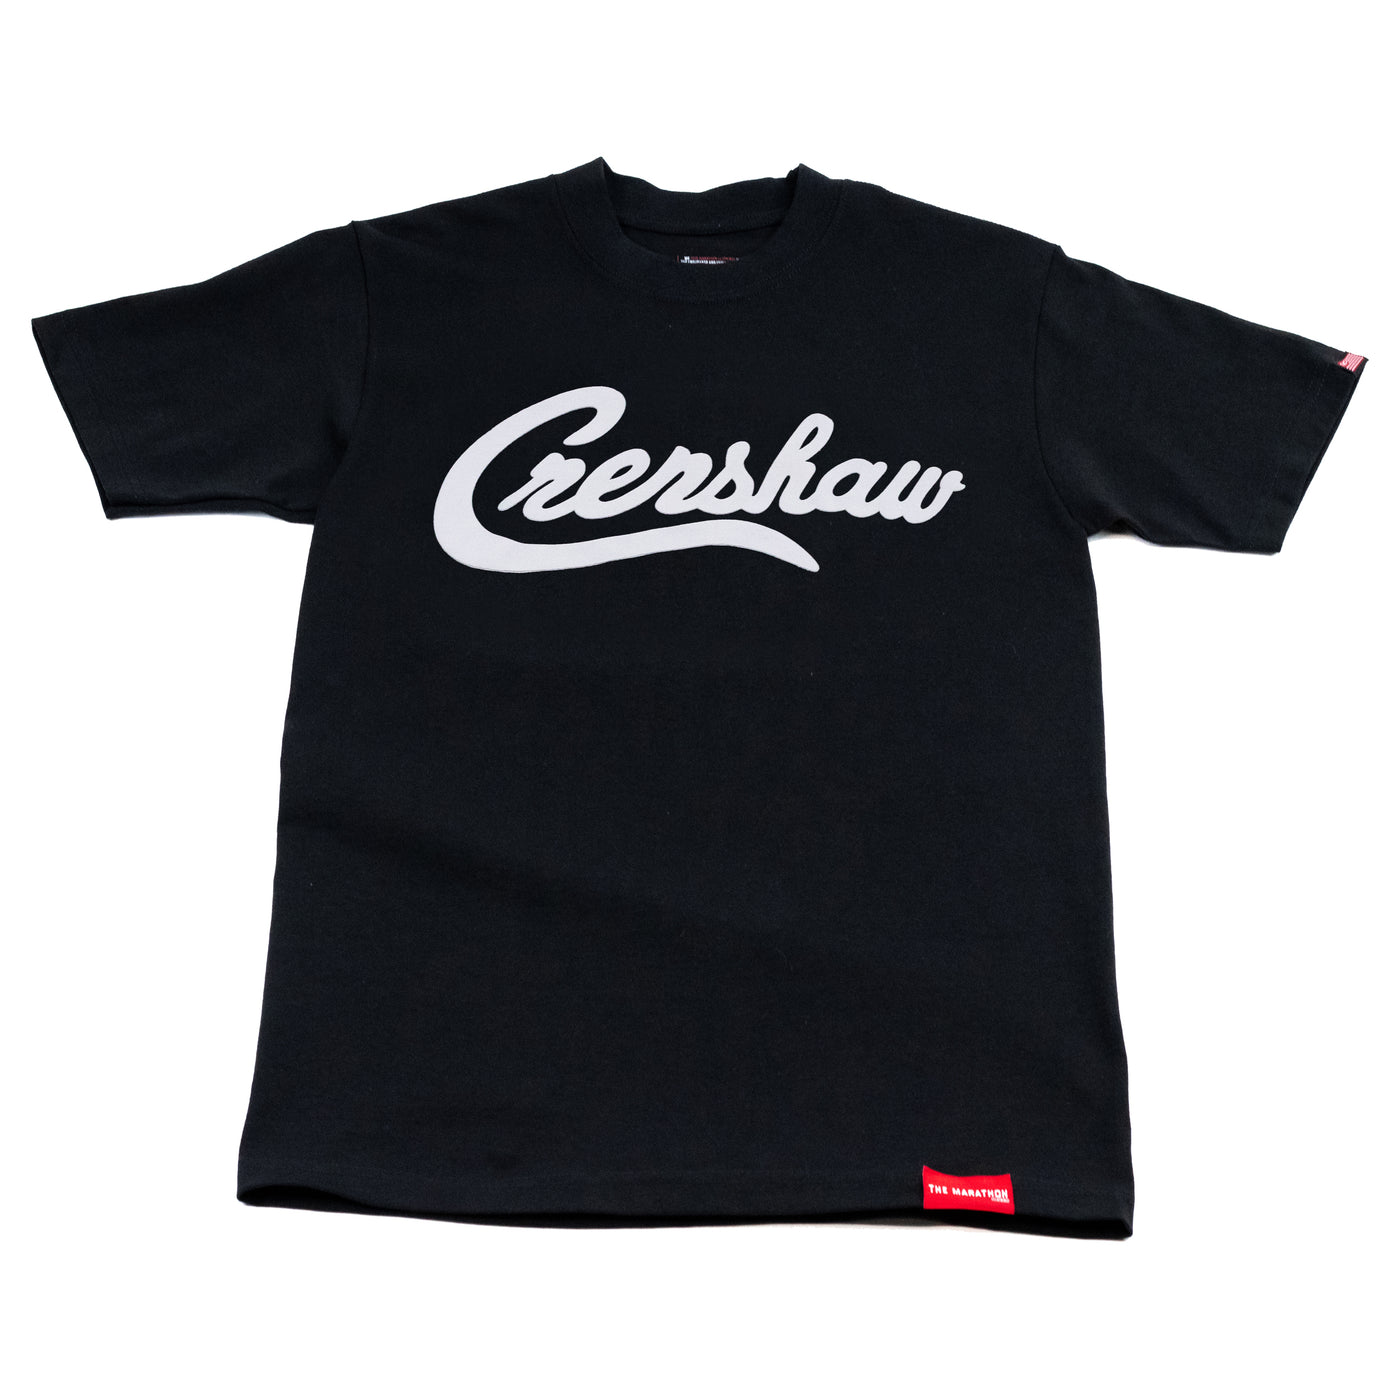 Crenshaw T-Shirt - Black/Grey - Front